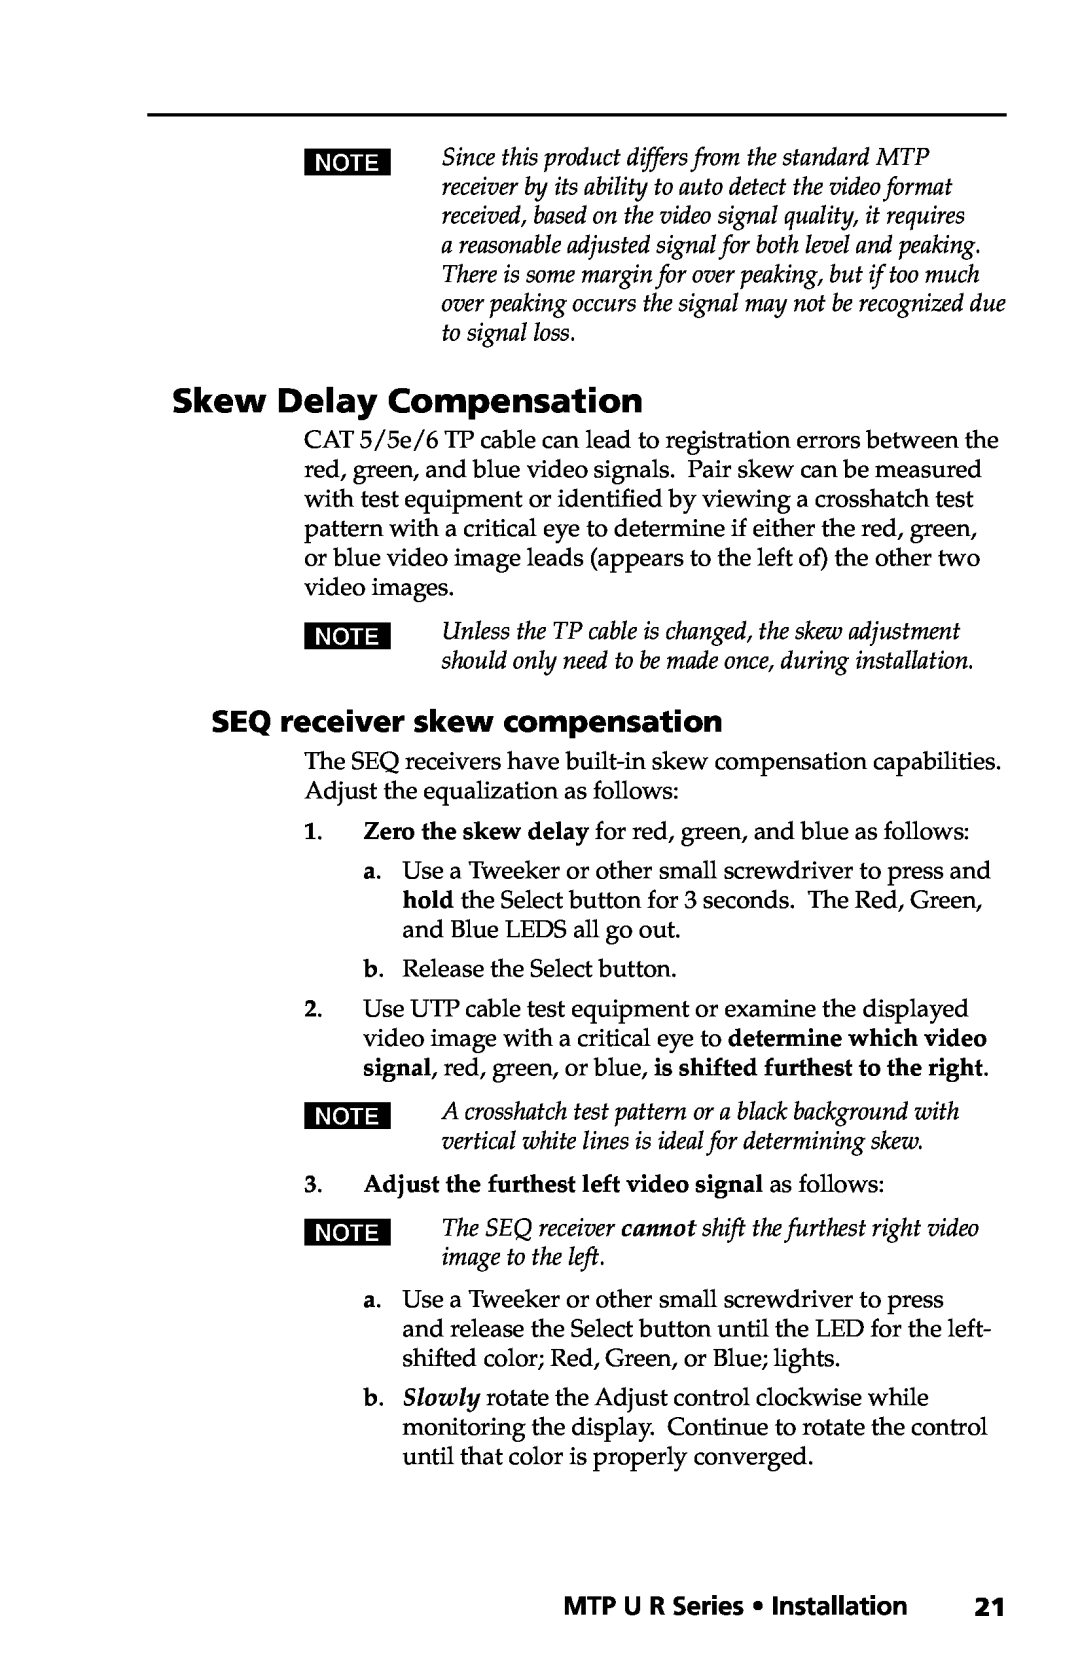 Extron electronic MTP U R A manual Skew Delay Compensation, SEQ receiver skew compensation, MTP U R Series Installation 